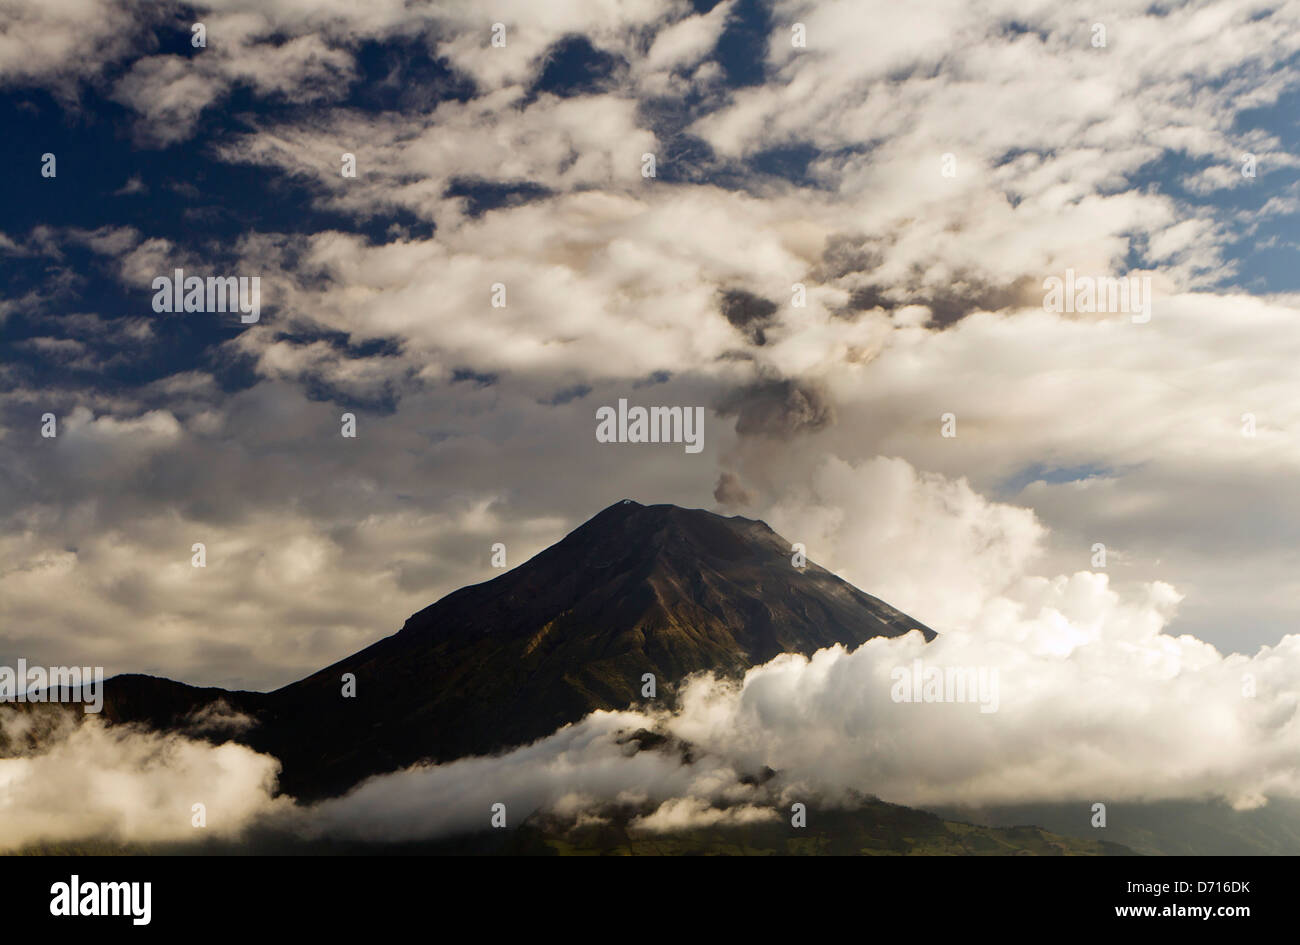 Tungurahua Volcano erupting, Ecuador March 2013 Stock Photo